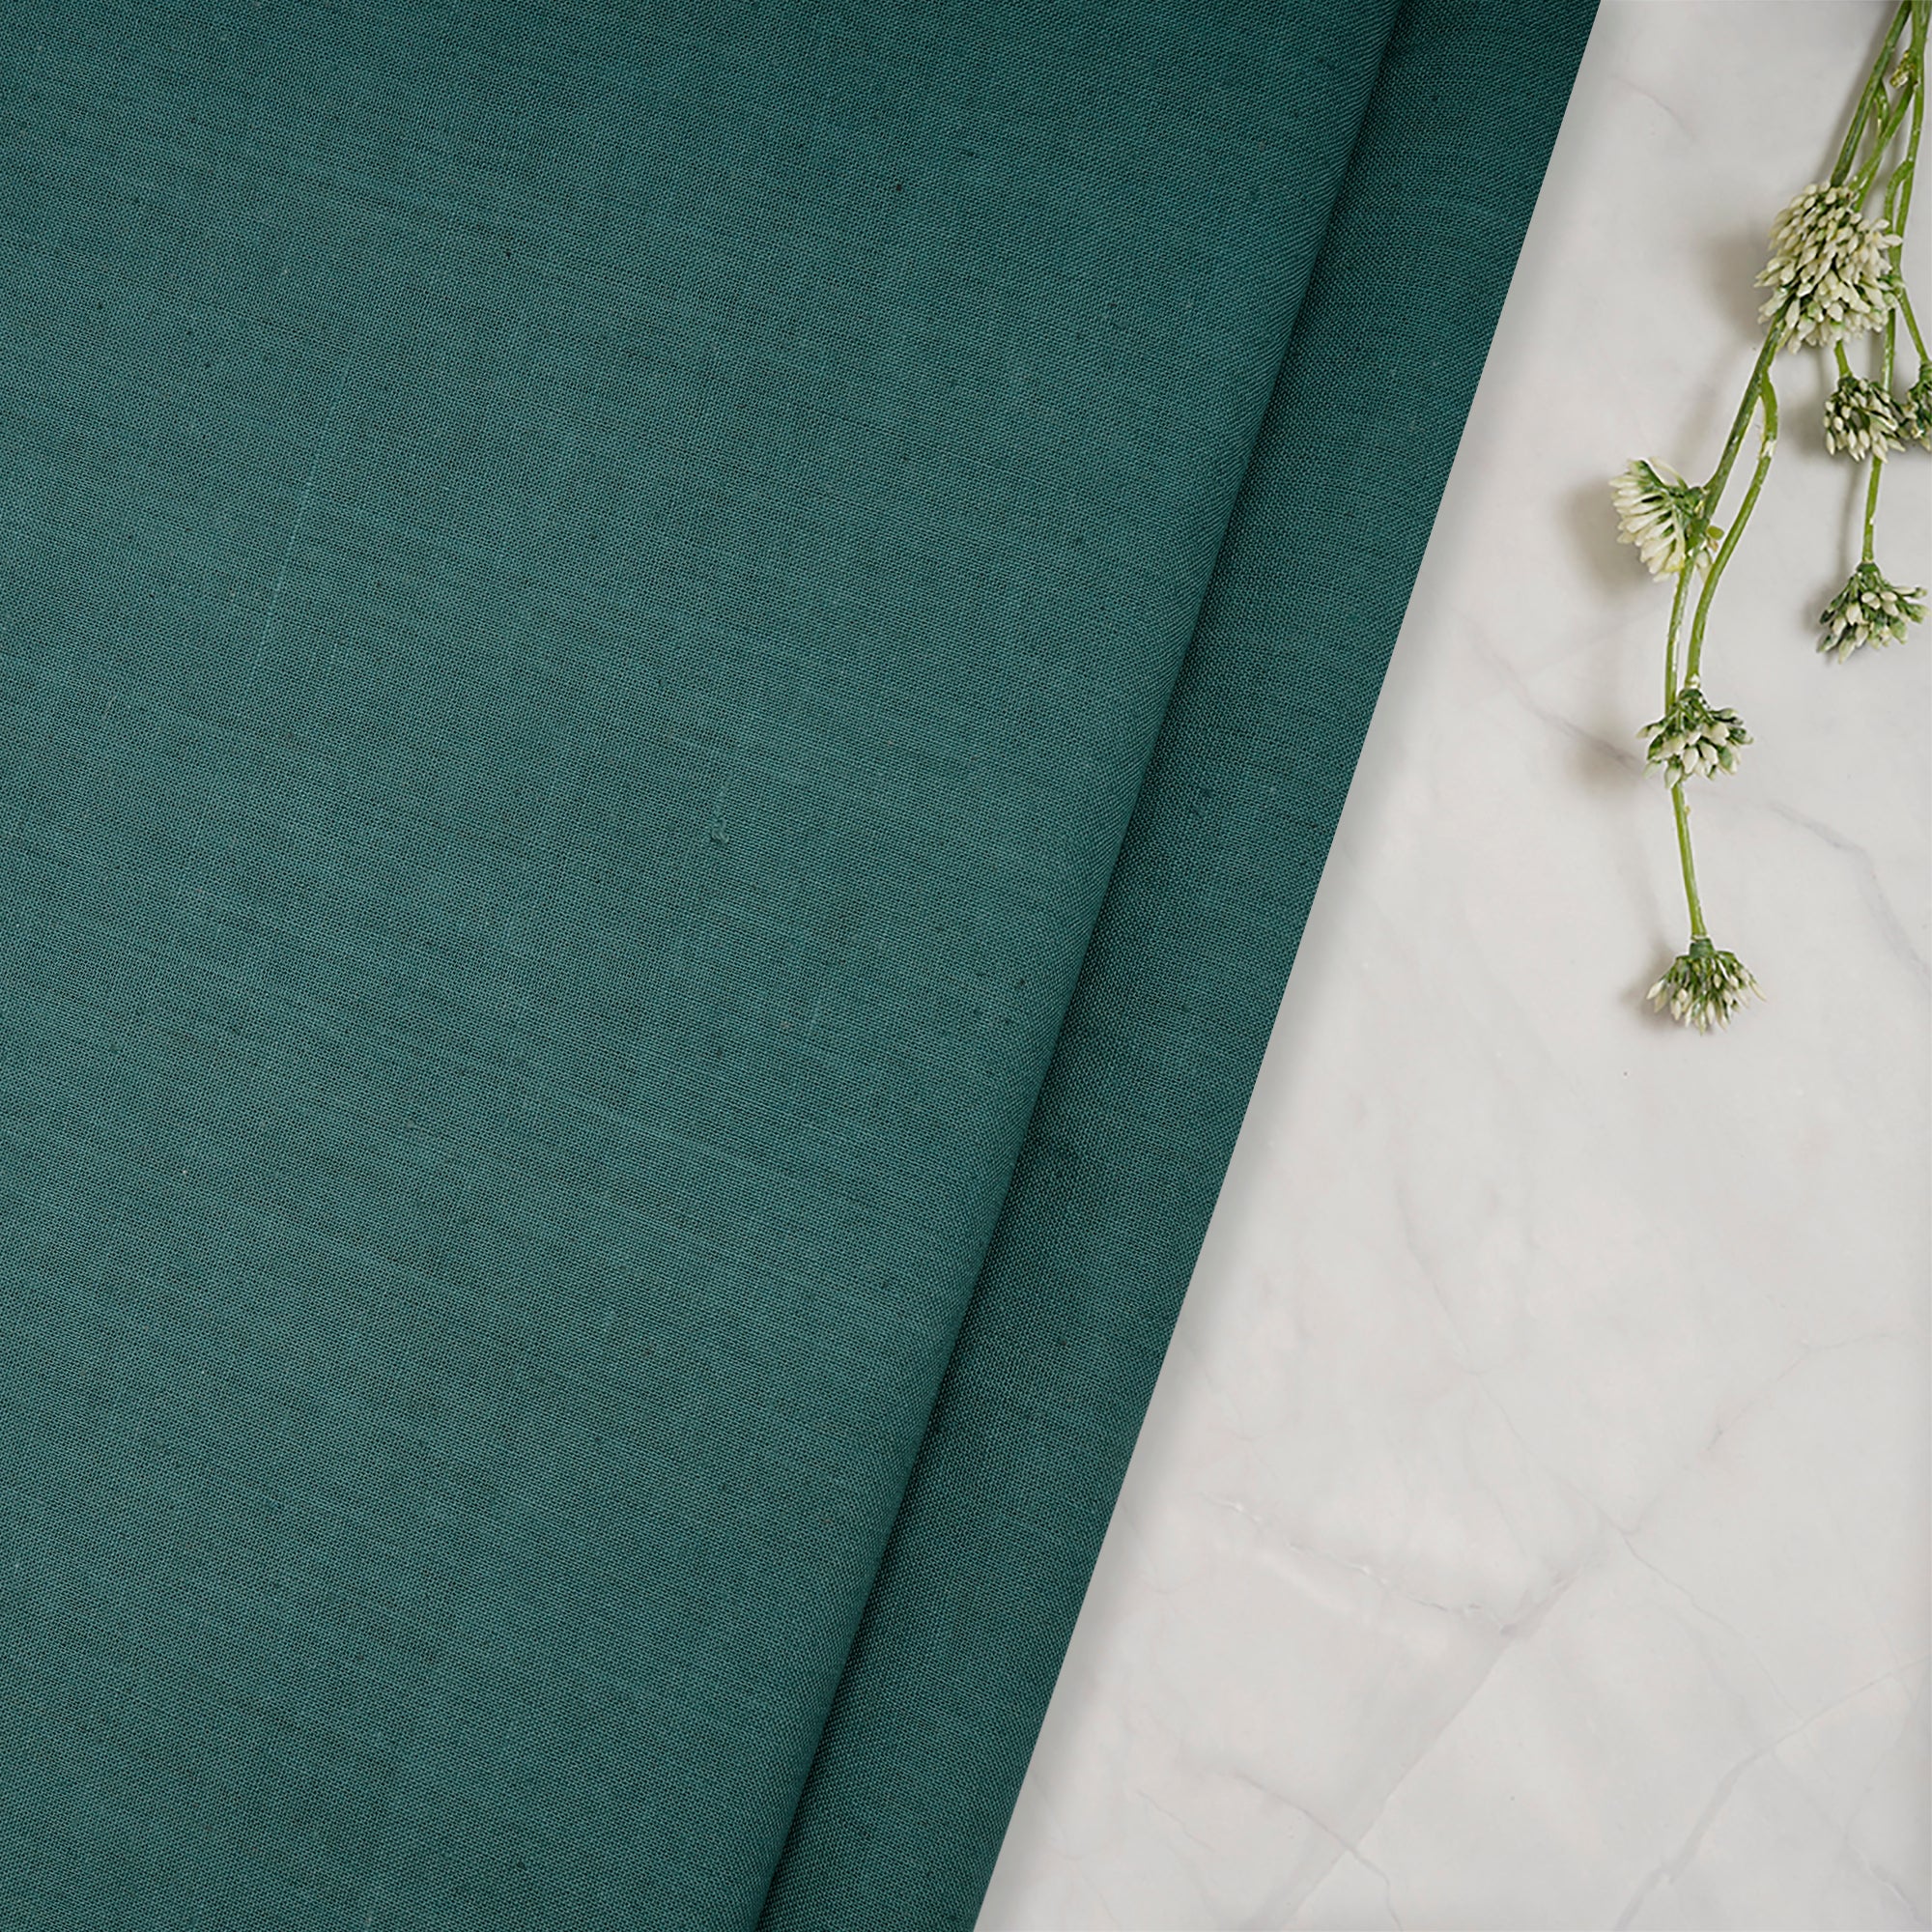 SageBrush Green 40's Count Piece Dyed Handspun Handwoven Cotton Fabric